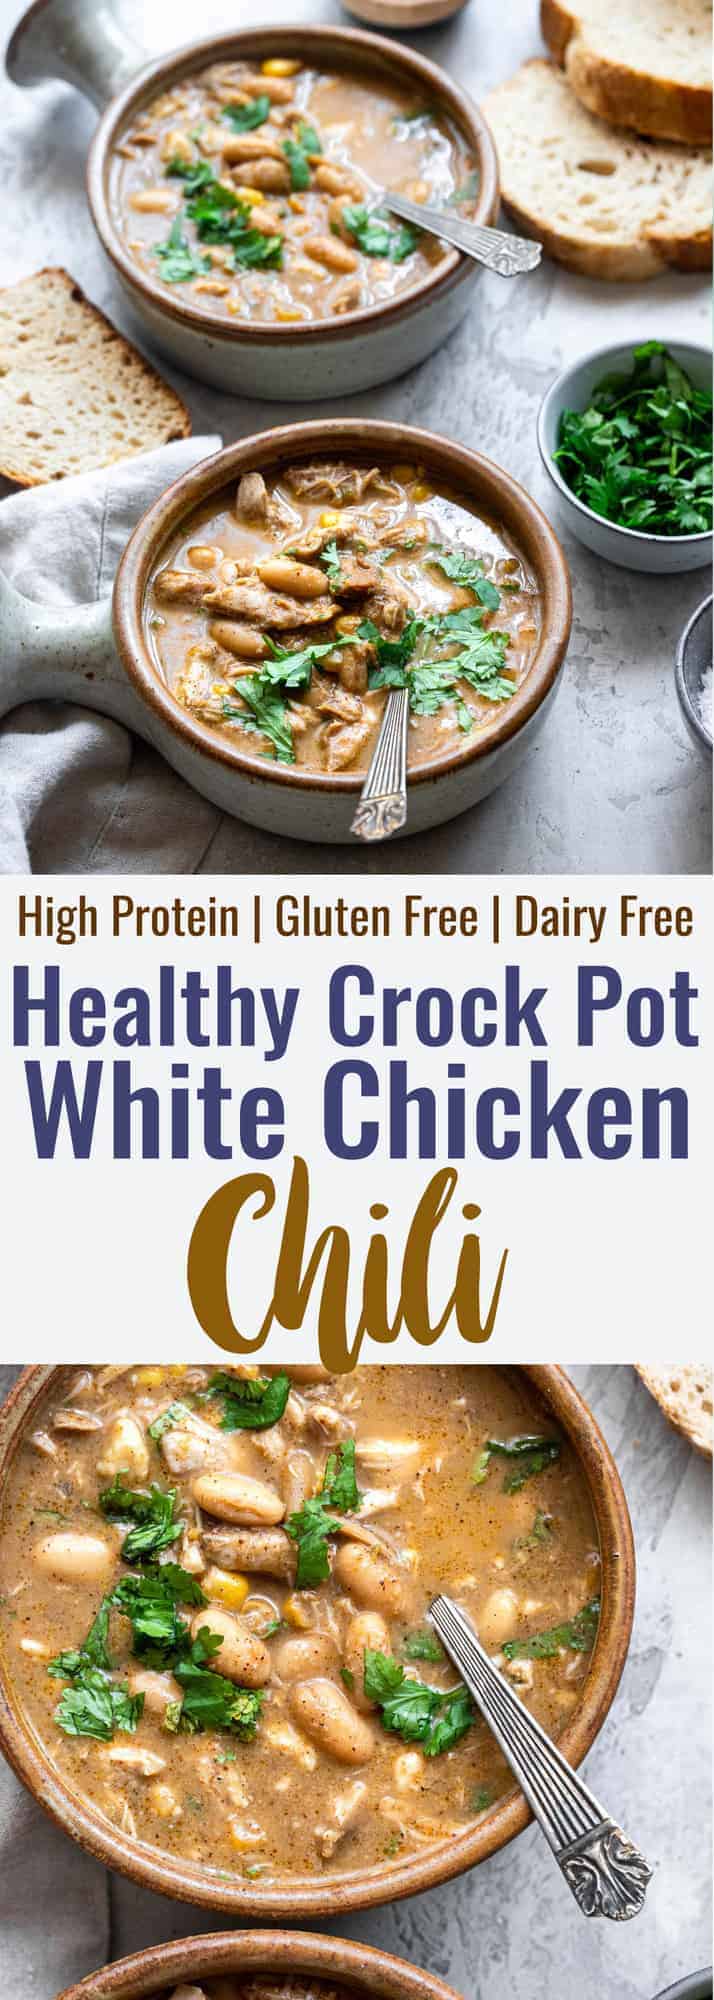 Crockpot White Chicken Chili Photo Collage